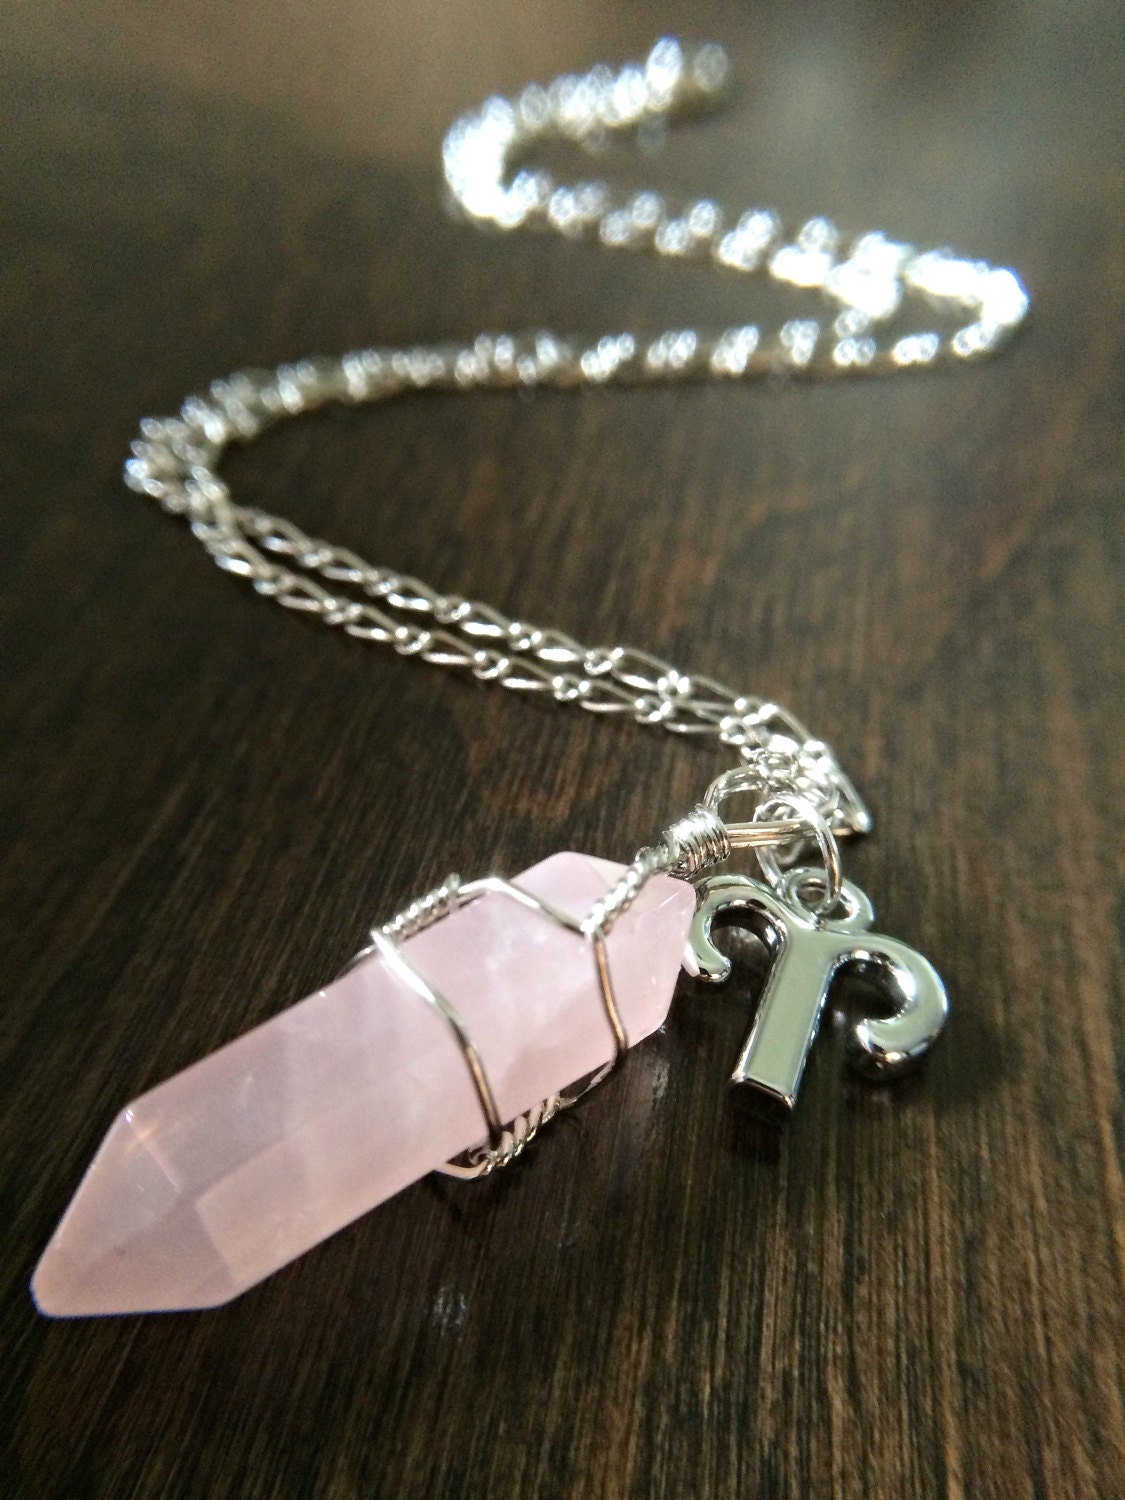 rose quartz necklace meaning